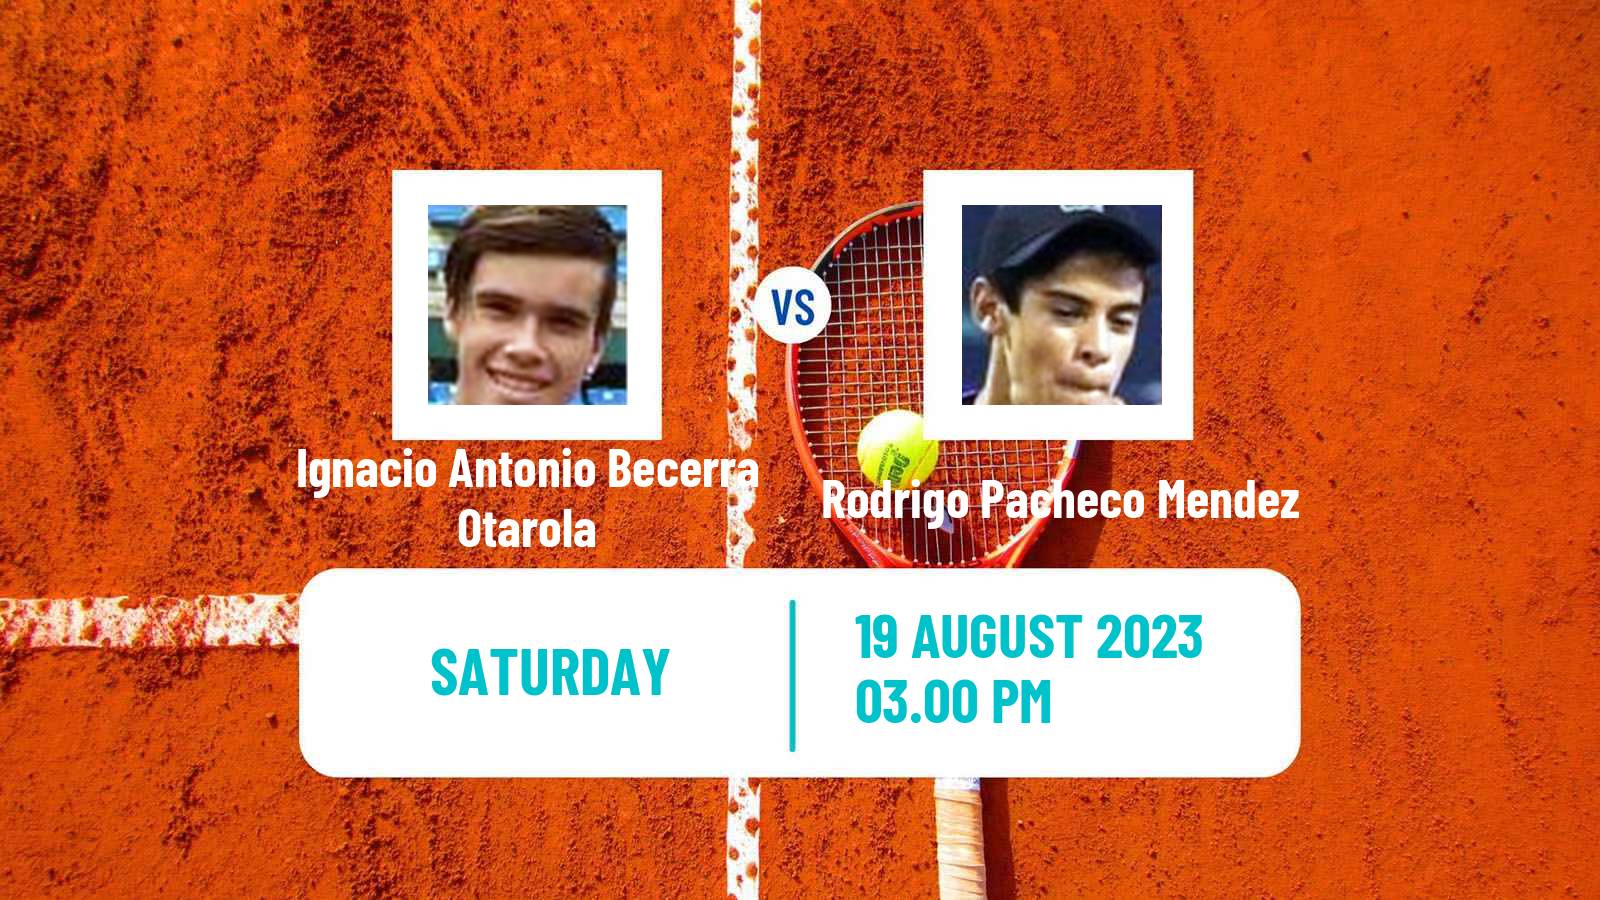 Tennis ITF M15 Belem Men Ignacio Antonio Becerra Otarola - Rodrigo Pacheco Mendez